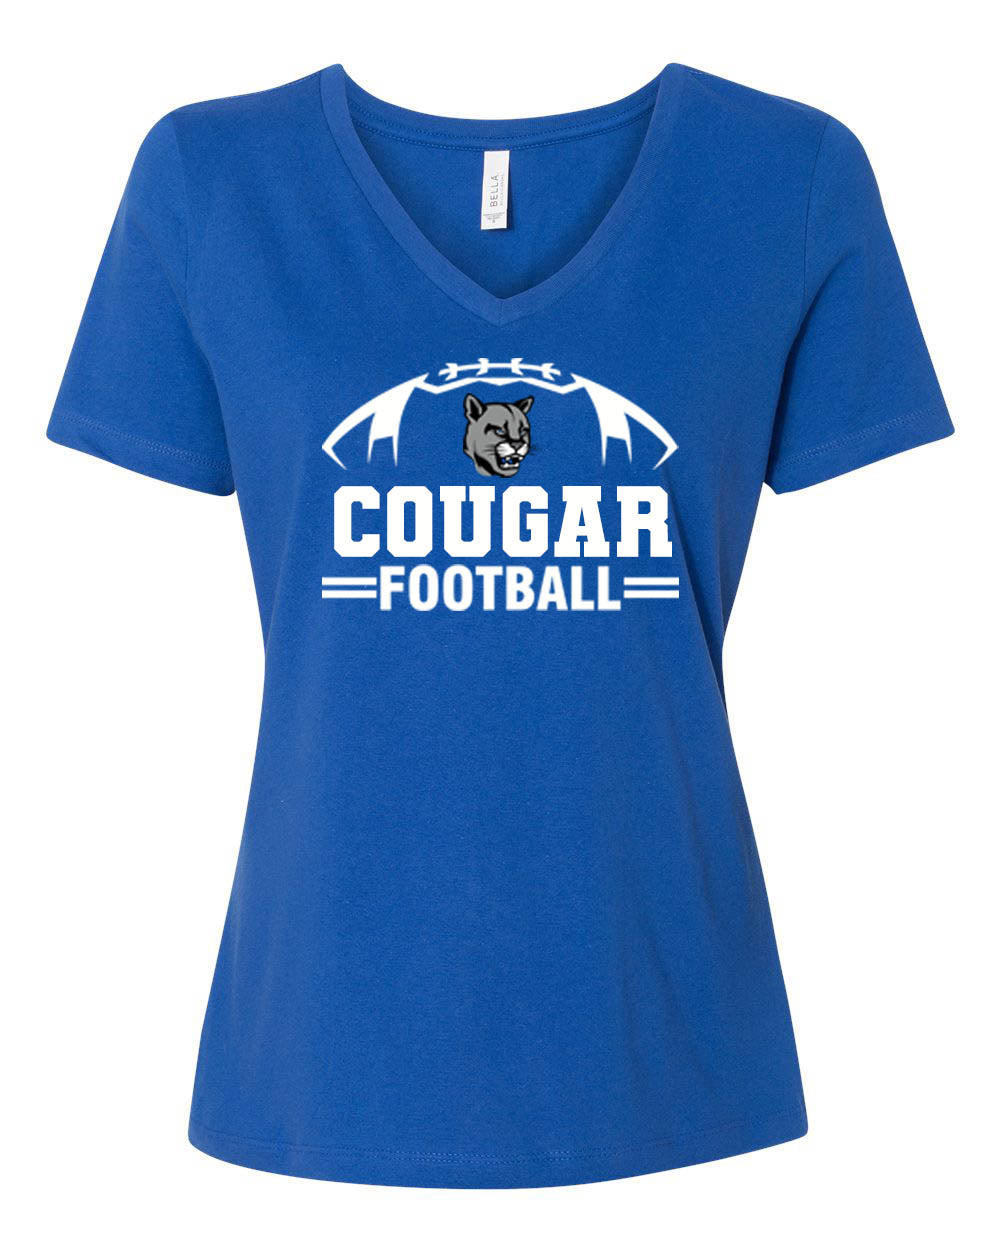 Cougars Football V-neck T-Shirt